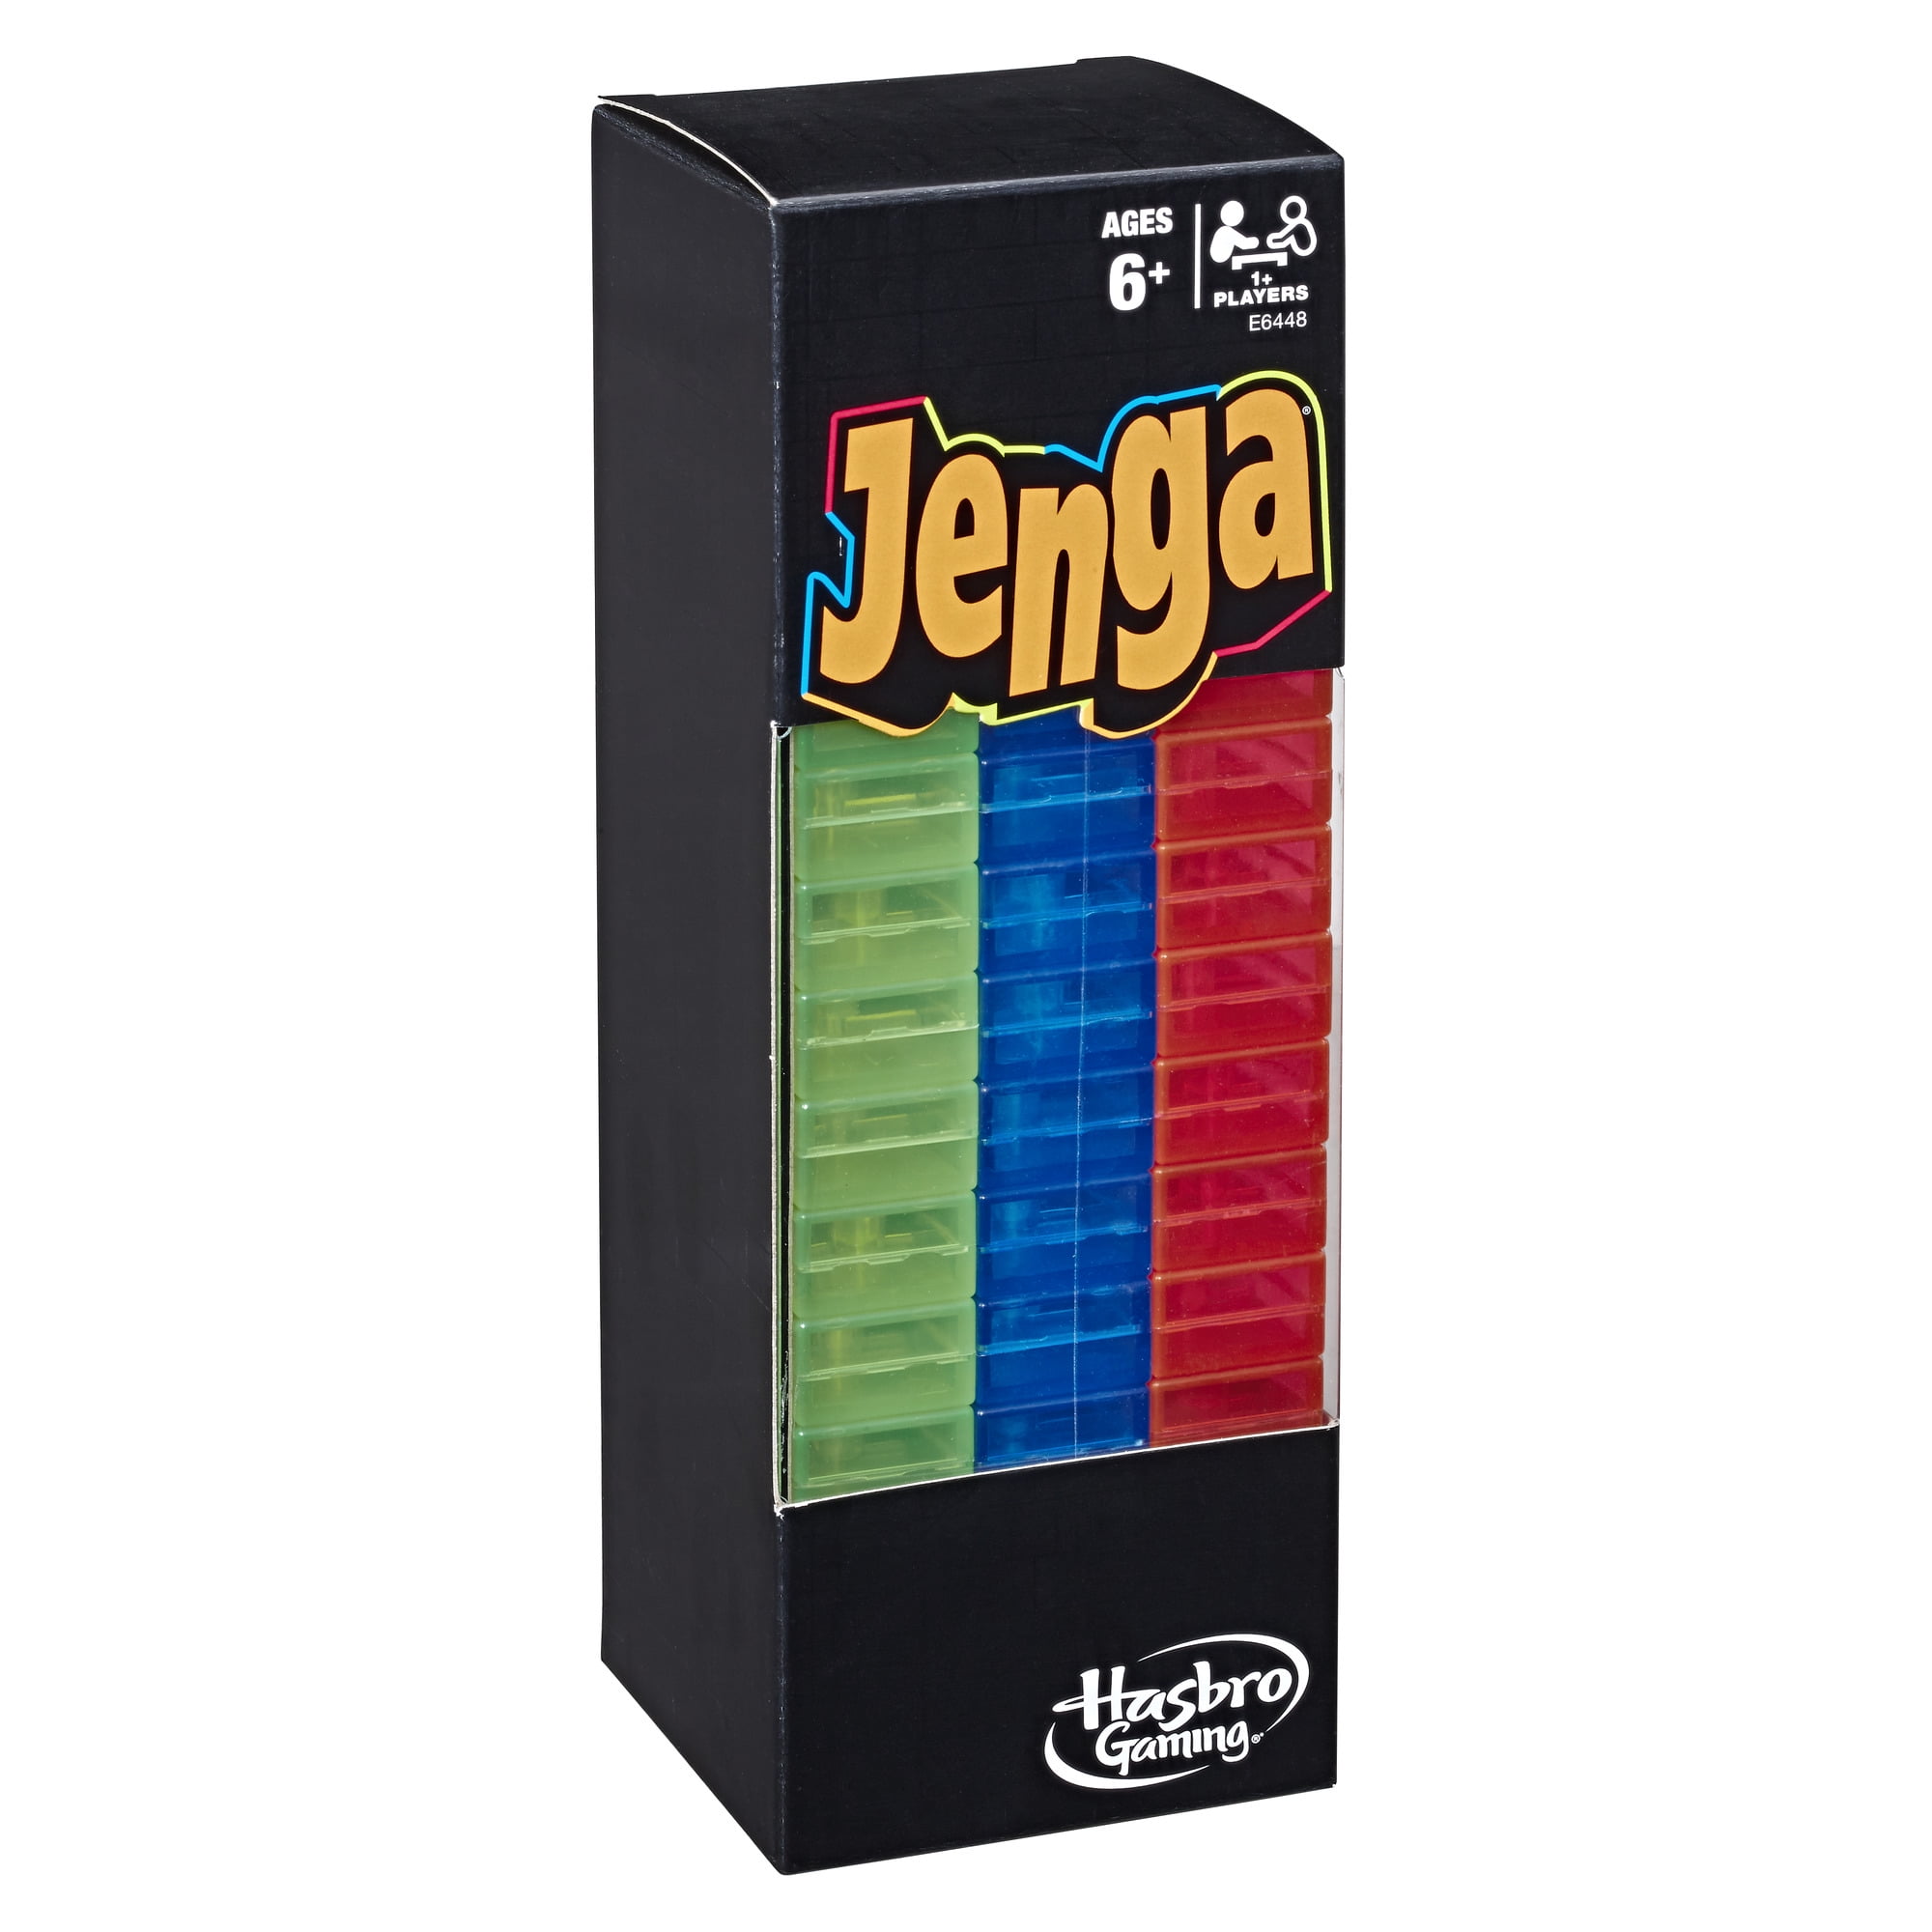 Brand New Classic Size Edition Jenga Hasbro Gaming 